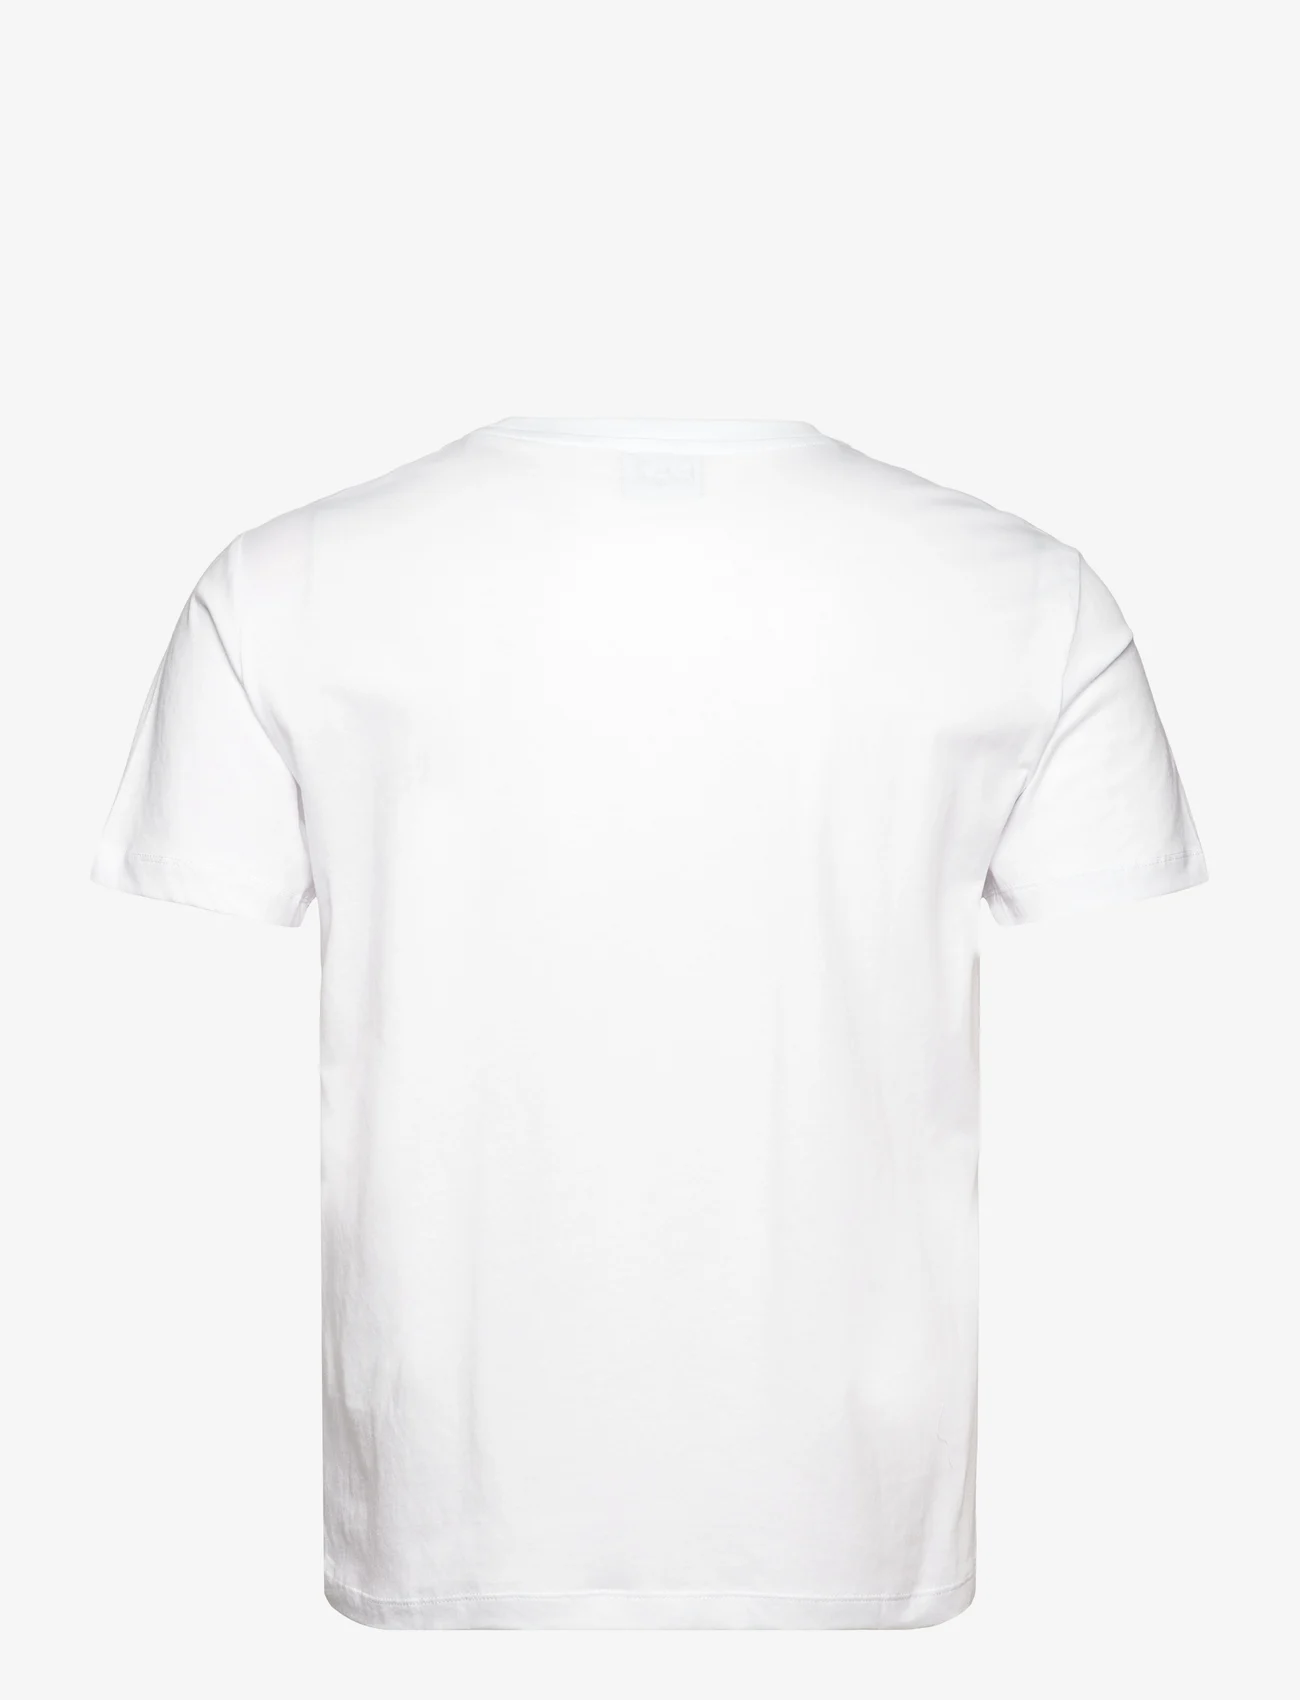 EA7 - T-SHIRT - t-shirts - white - 1